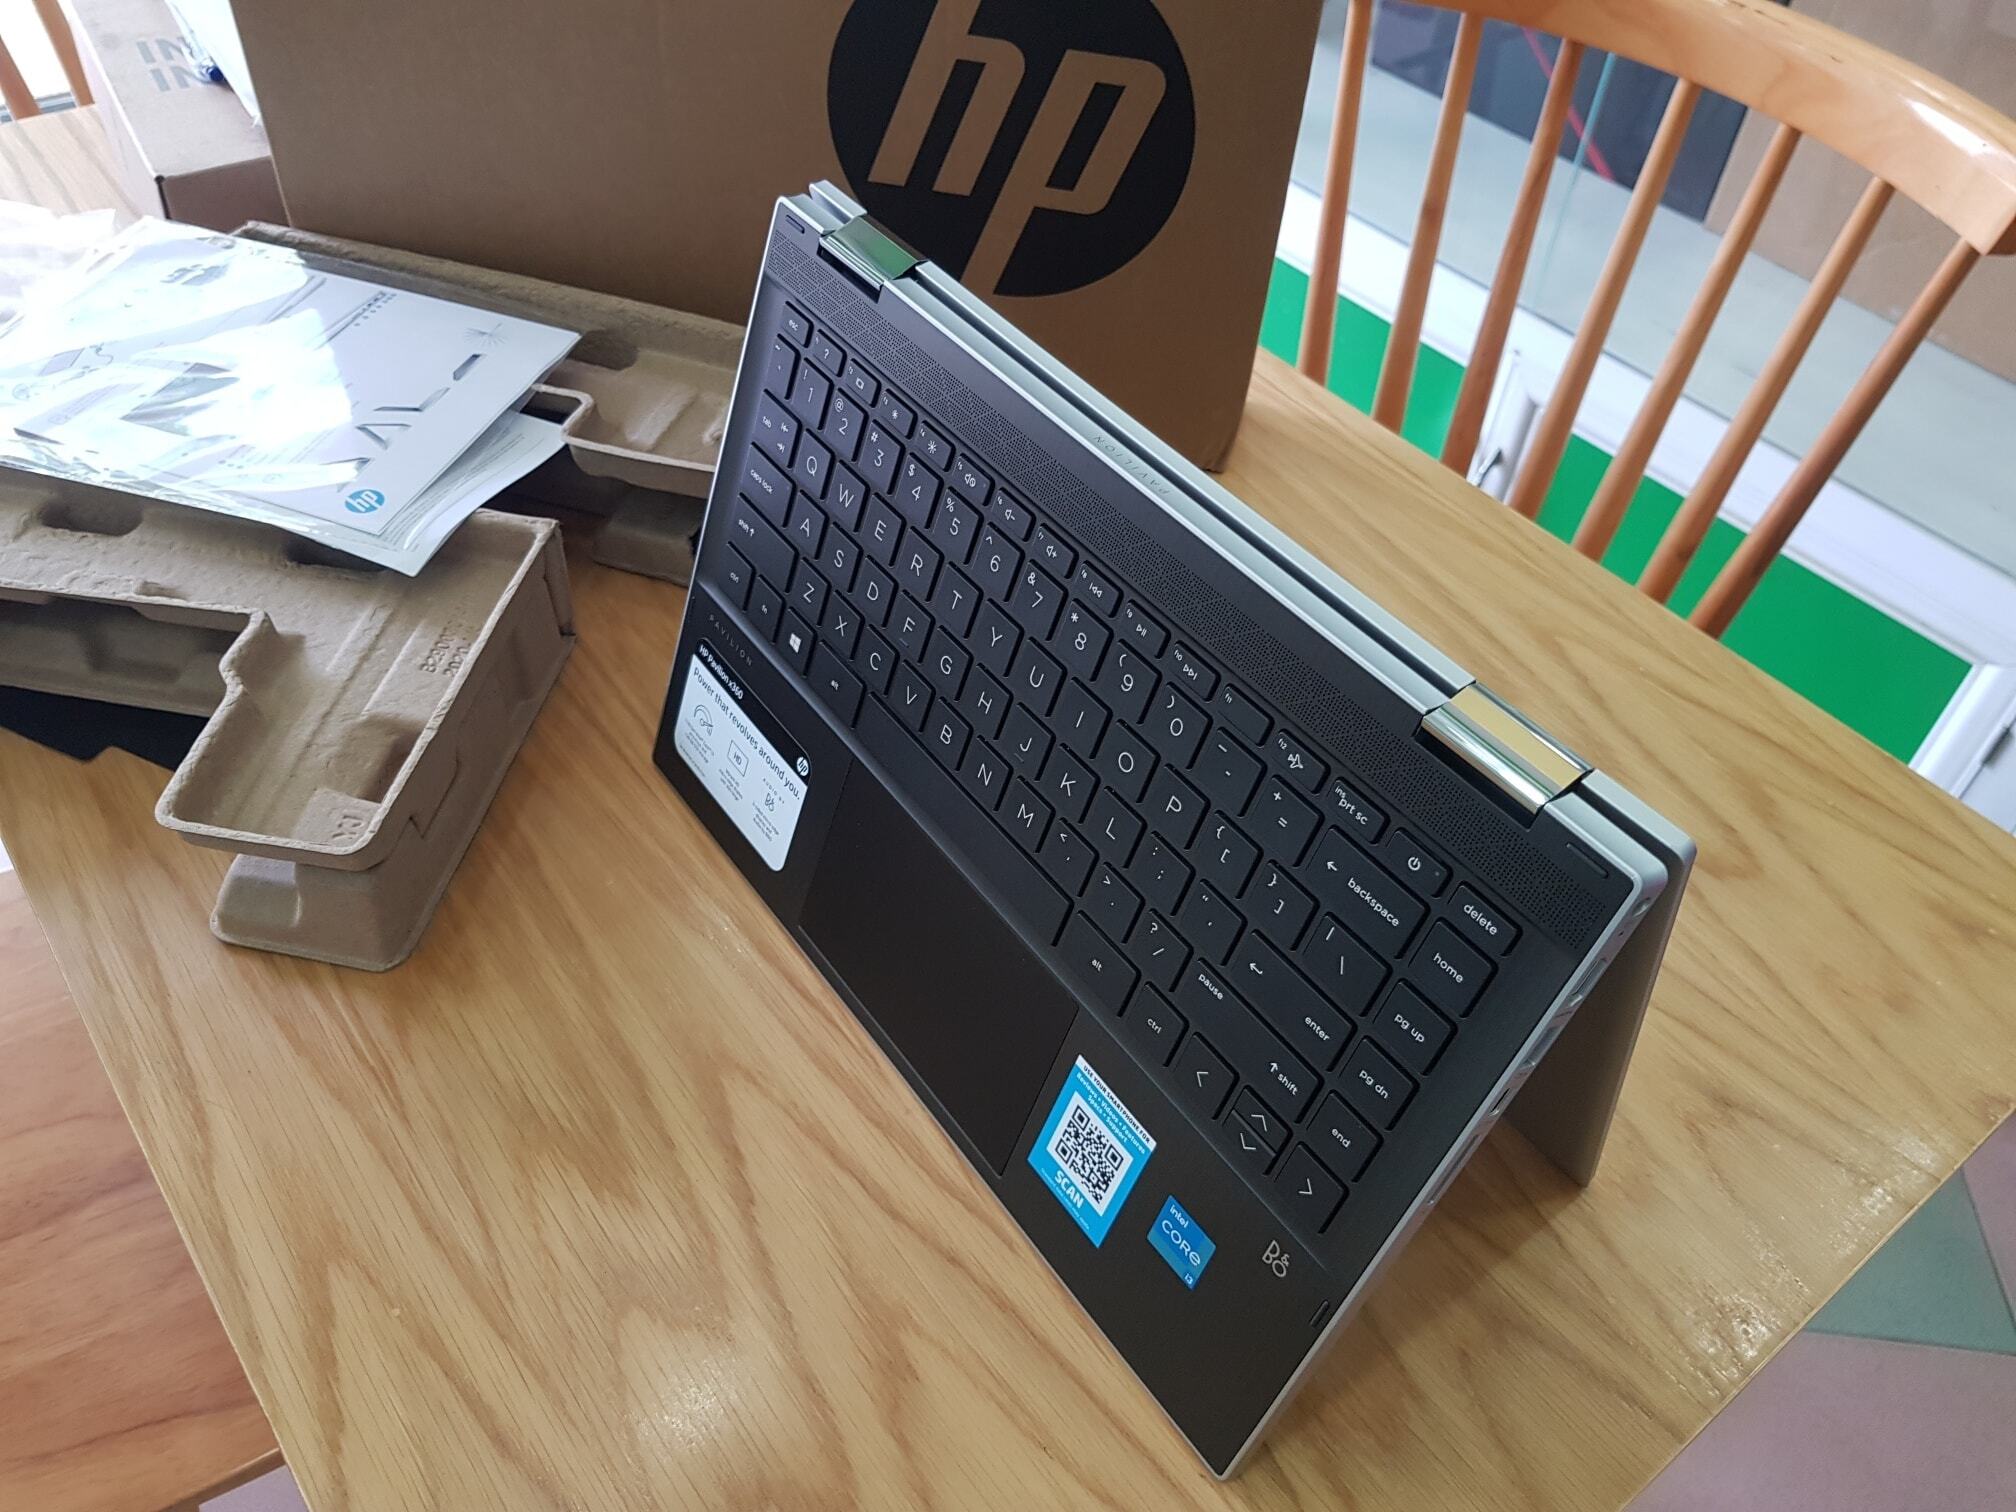 Laptop HP Pavilion x360 m Convertible 14m-dw1013dx - Intel core i3-1115G4, 8GB RAM, SSD 128GB, Intel Iris Xe Graphics, 14 inch